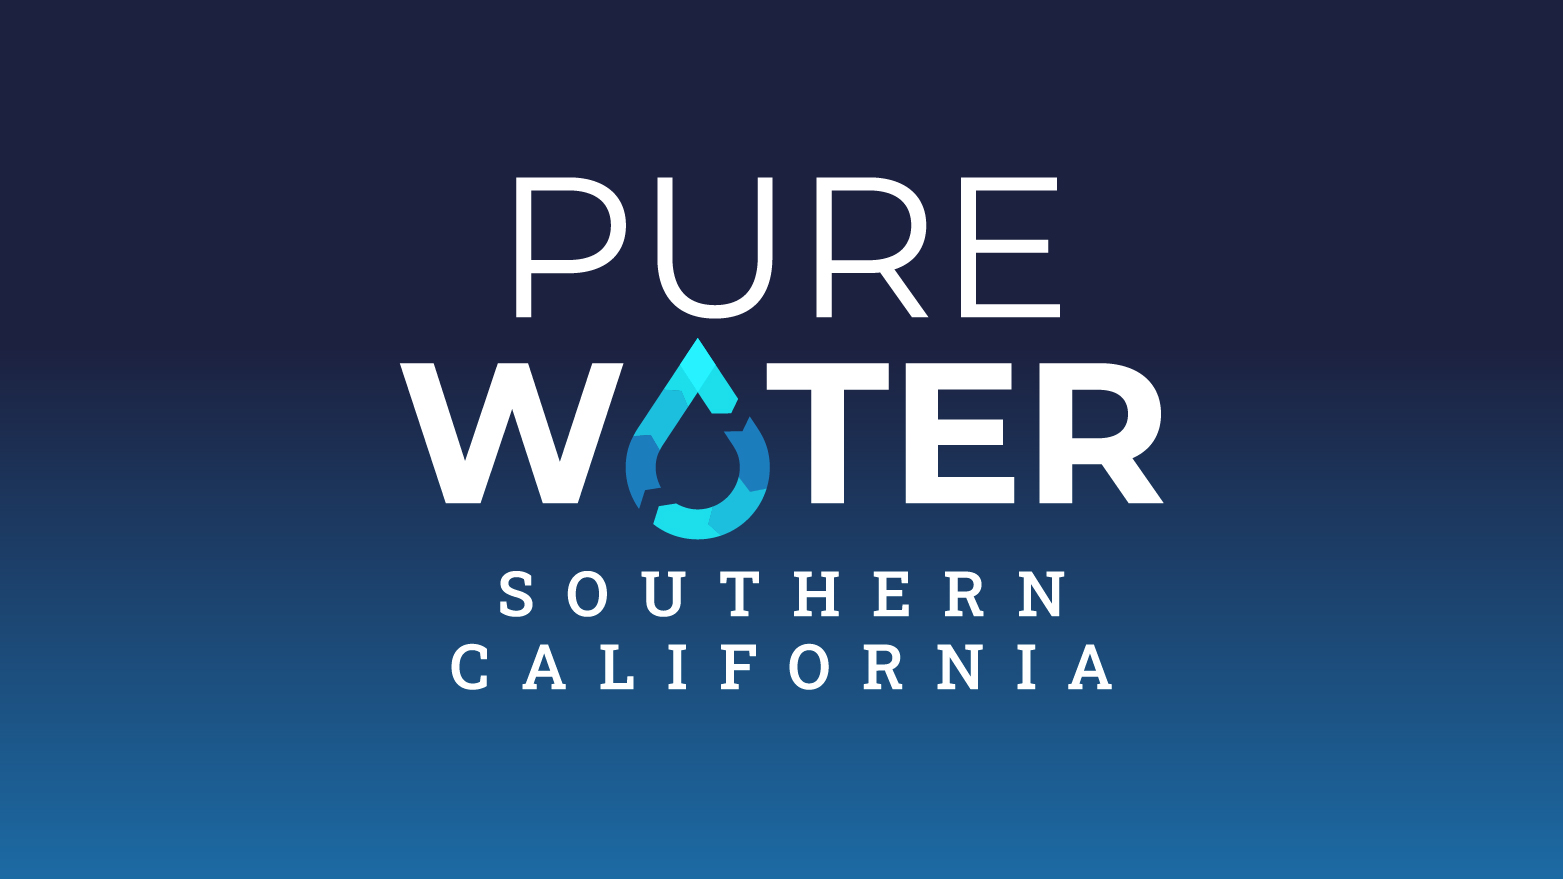 PURE WATER SOUTHERN CALIFORNIA ENVIRONMENTAL REVIEW BEGINS 